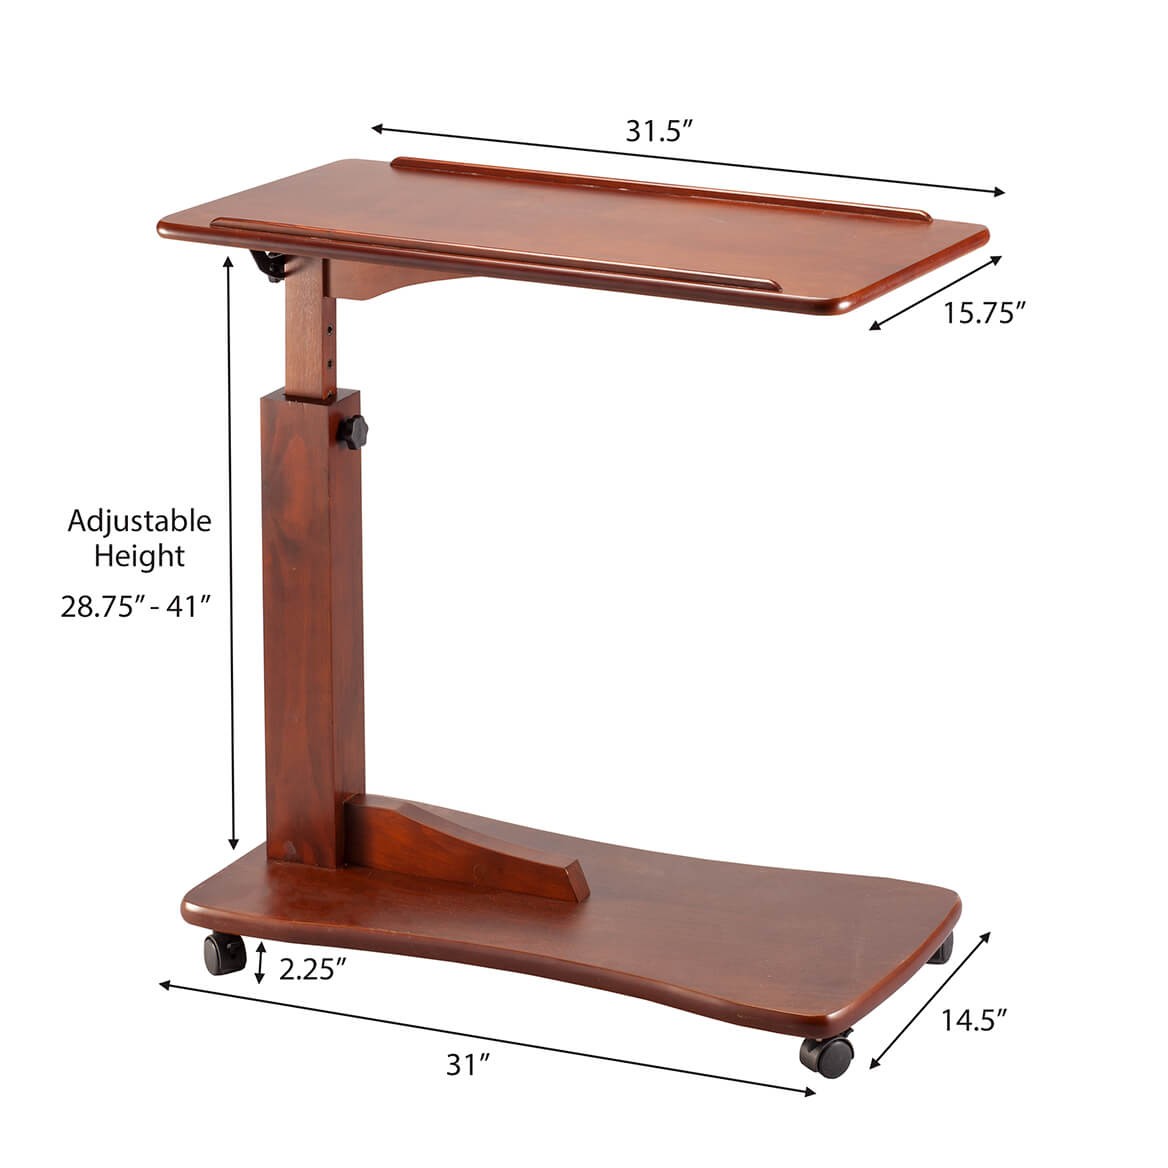 Adjustable side table by oakridge easy comforts